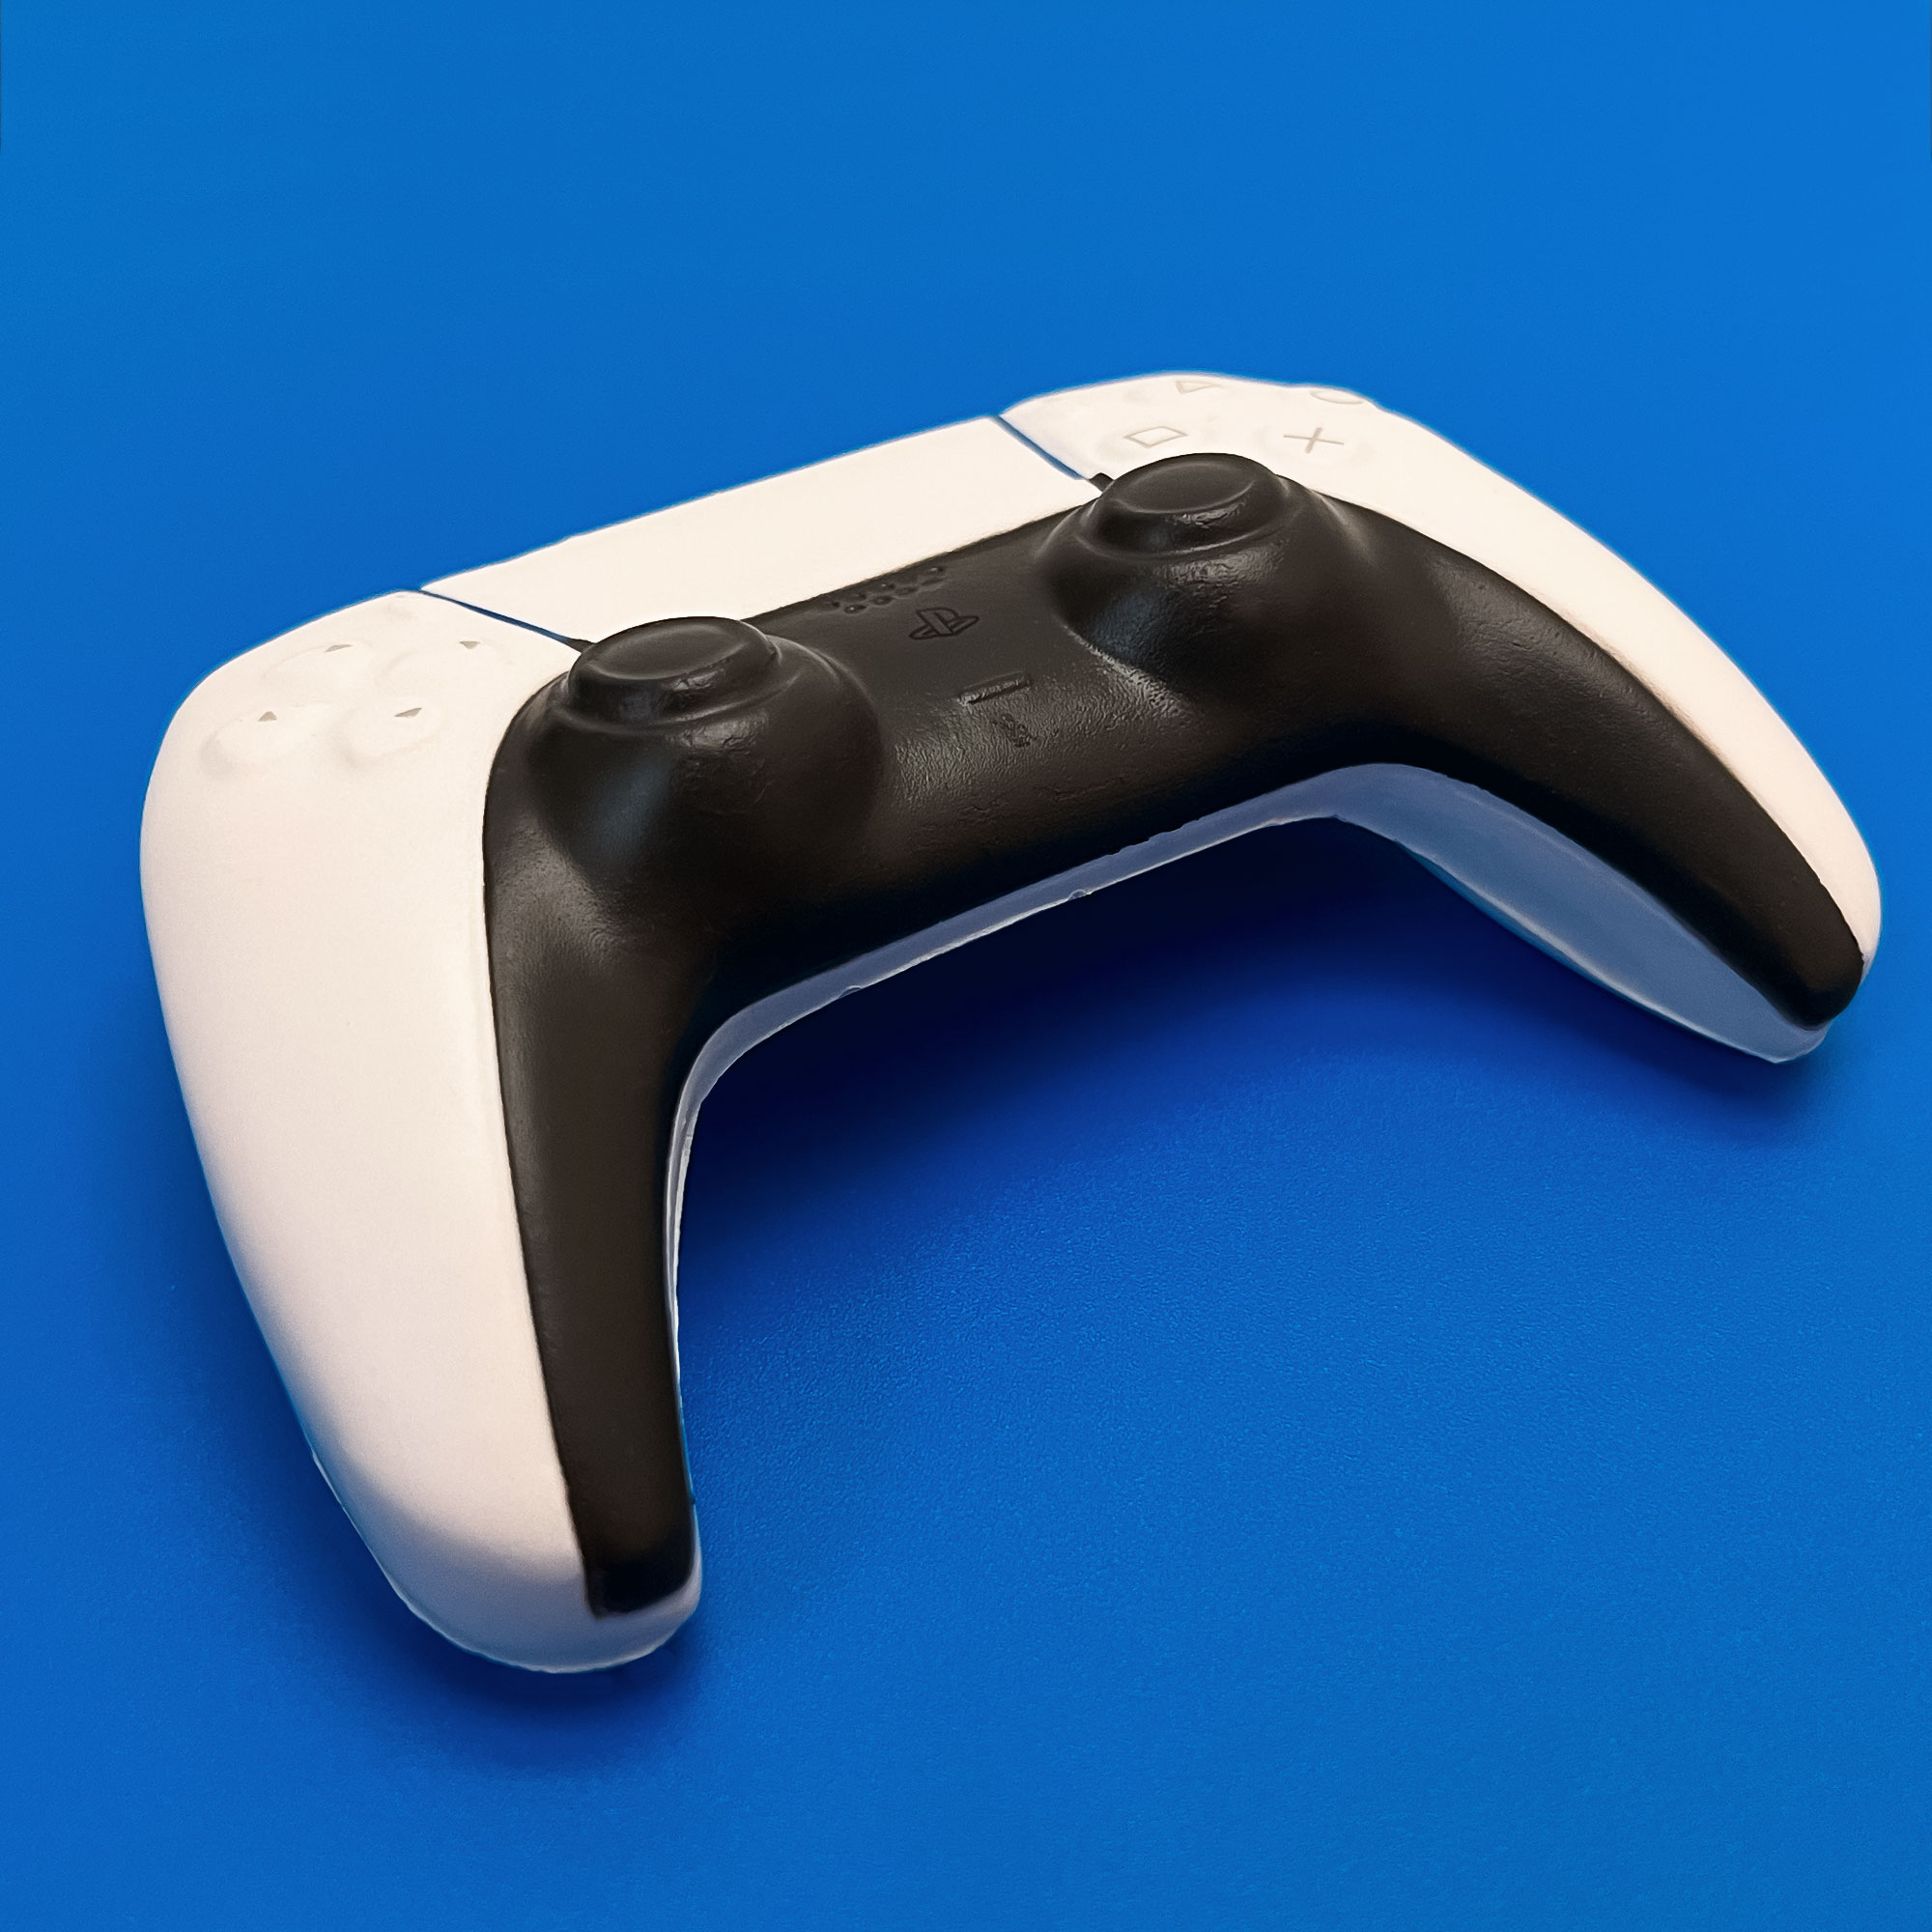 Stressball - PlayStation Controller - Weiß